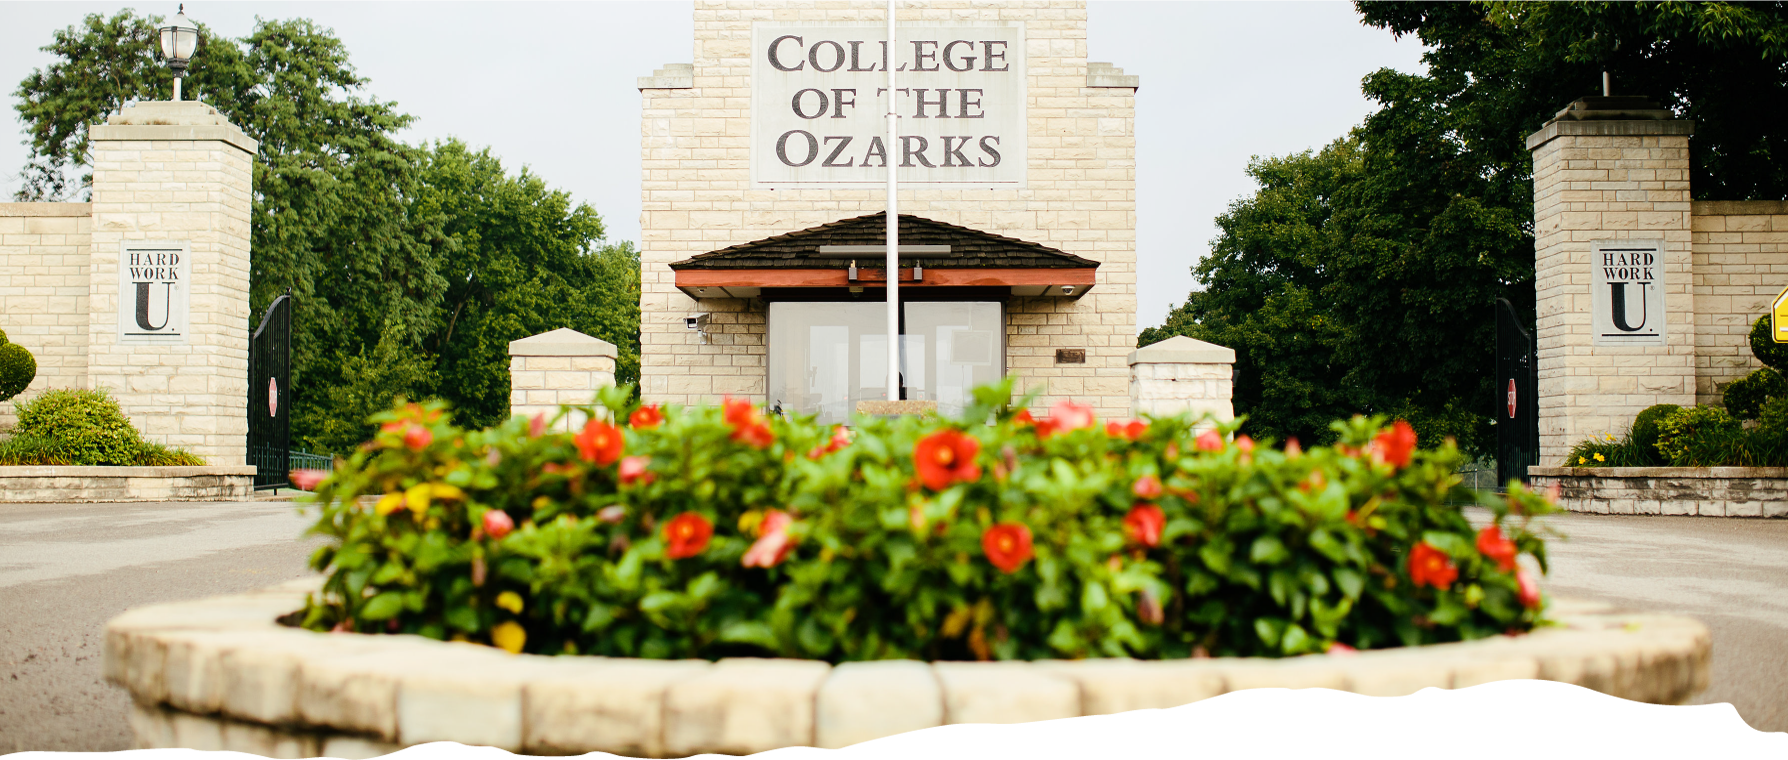 College of the Ozarks Entrance